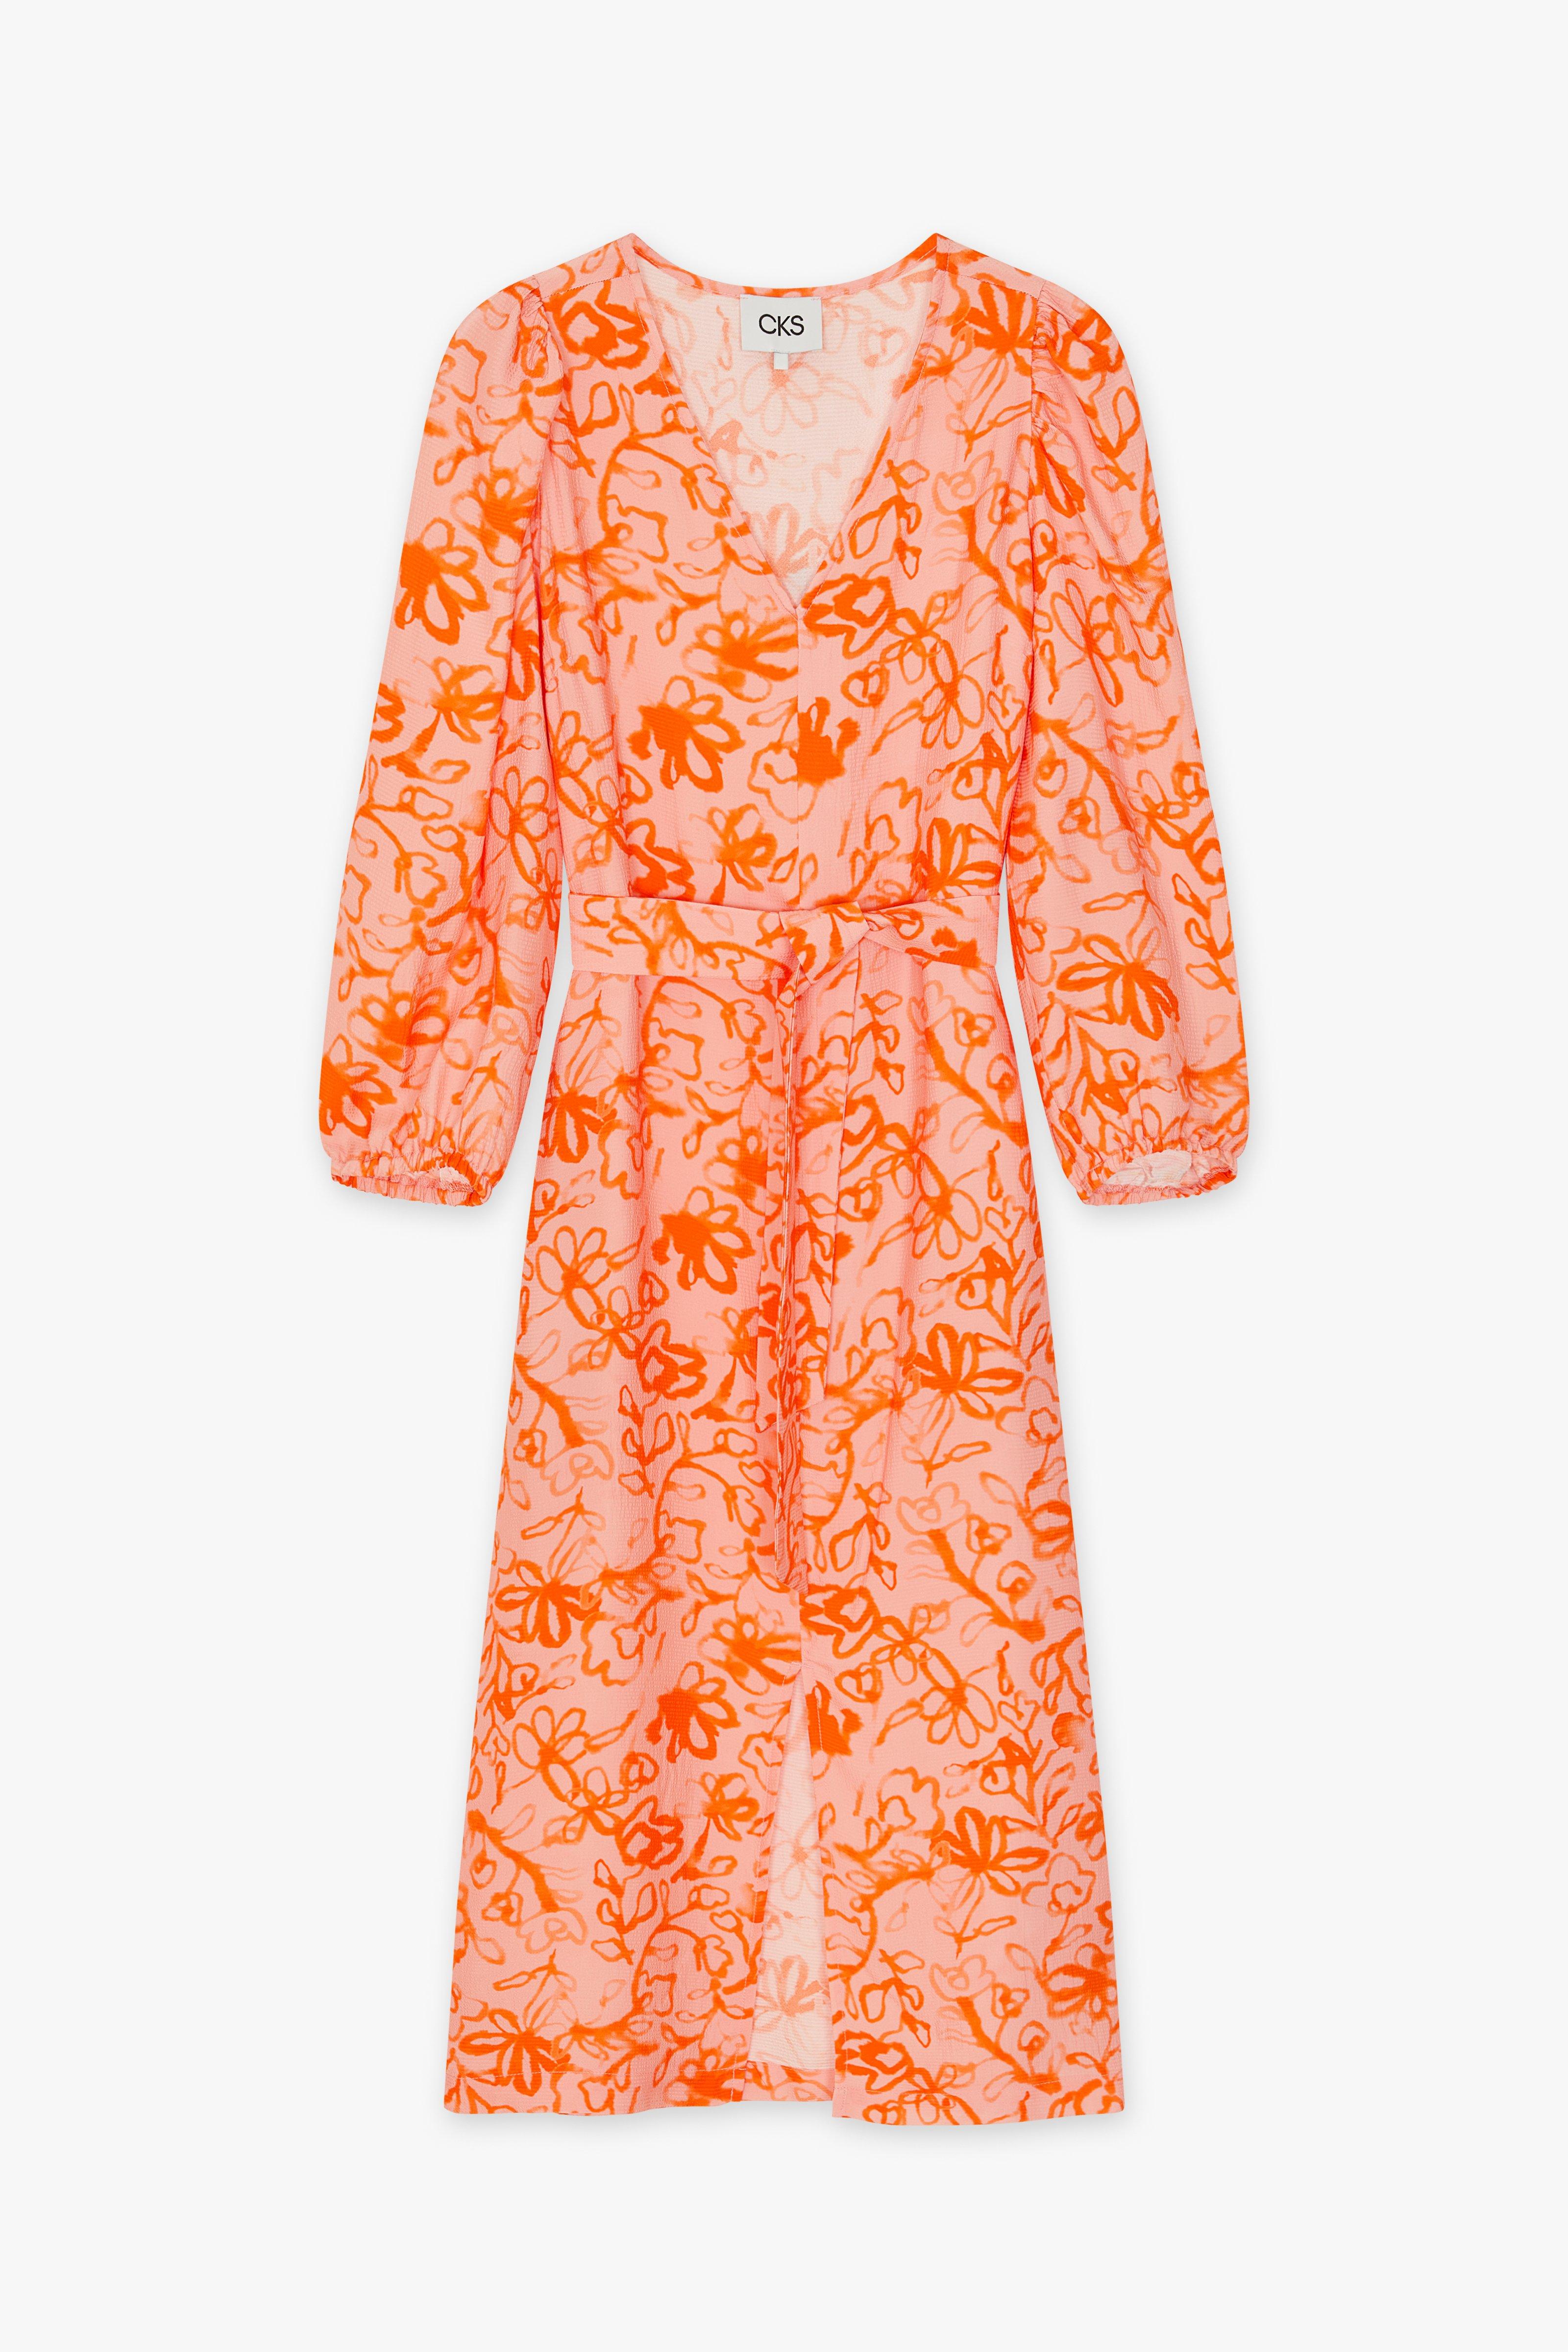 Cks fashion Bright Orange and Pink Print Dorisa Midi Dress